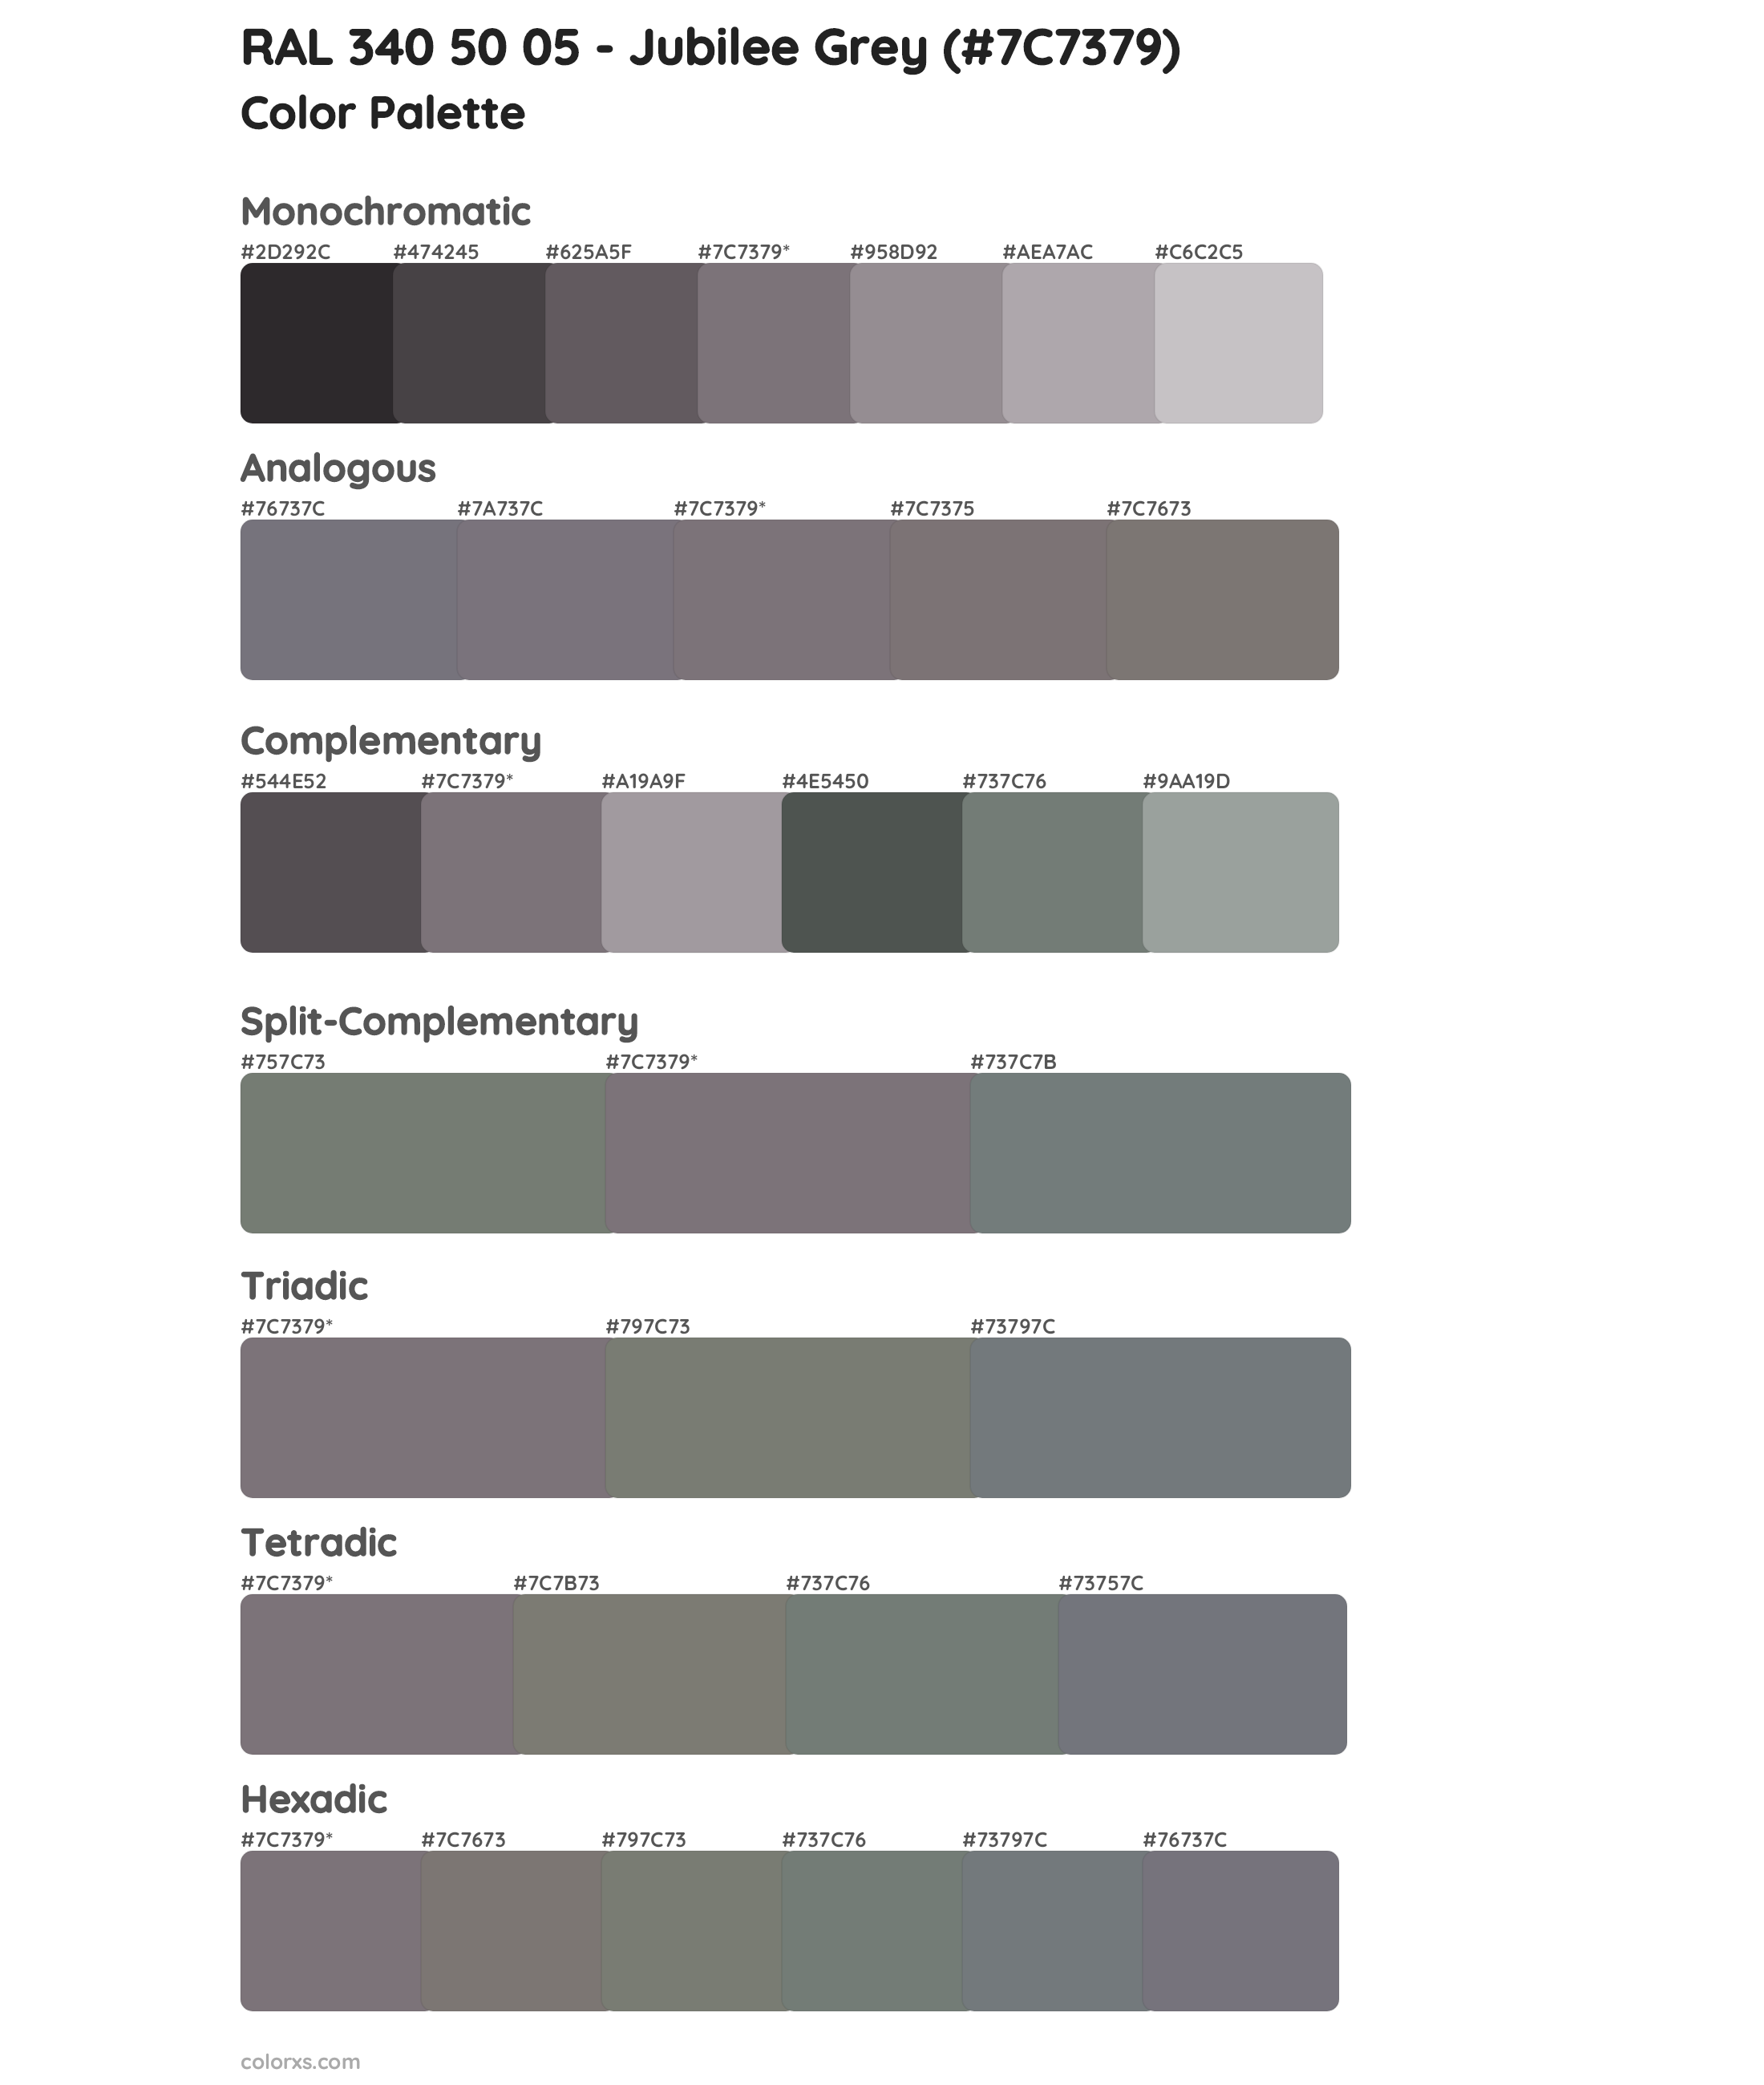 RAL 340 50 05 - Jubilee Grey Color Scheme Palettes